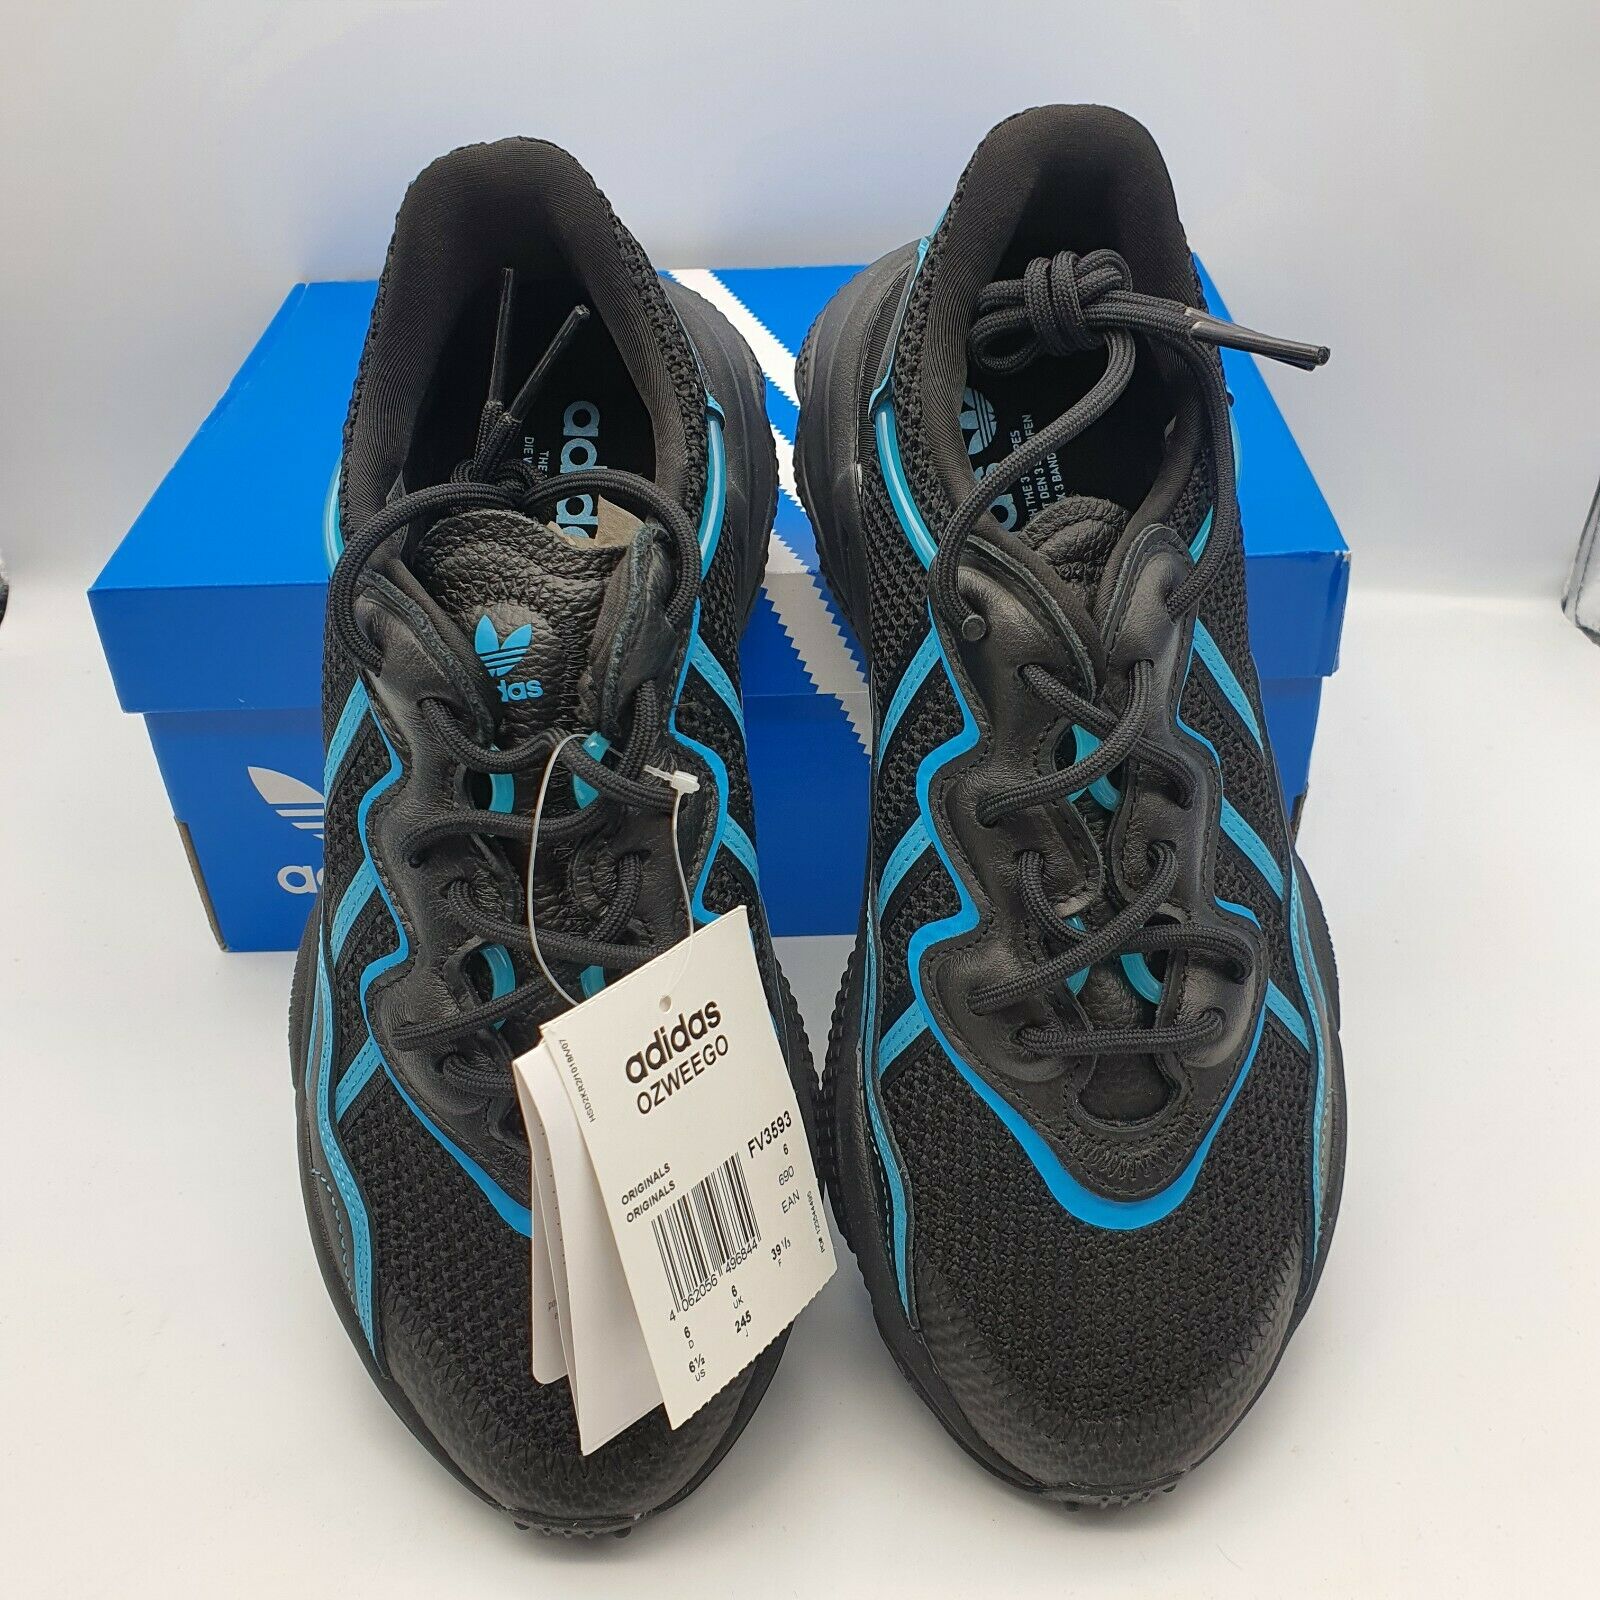 Adidas Originals Ozweego Men's Running Shoes FV3593 US-6.5 Black Friday Deals!!